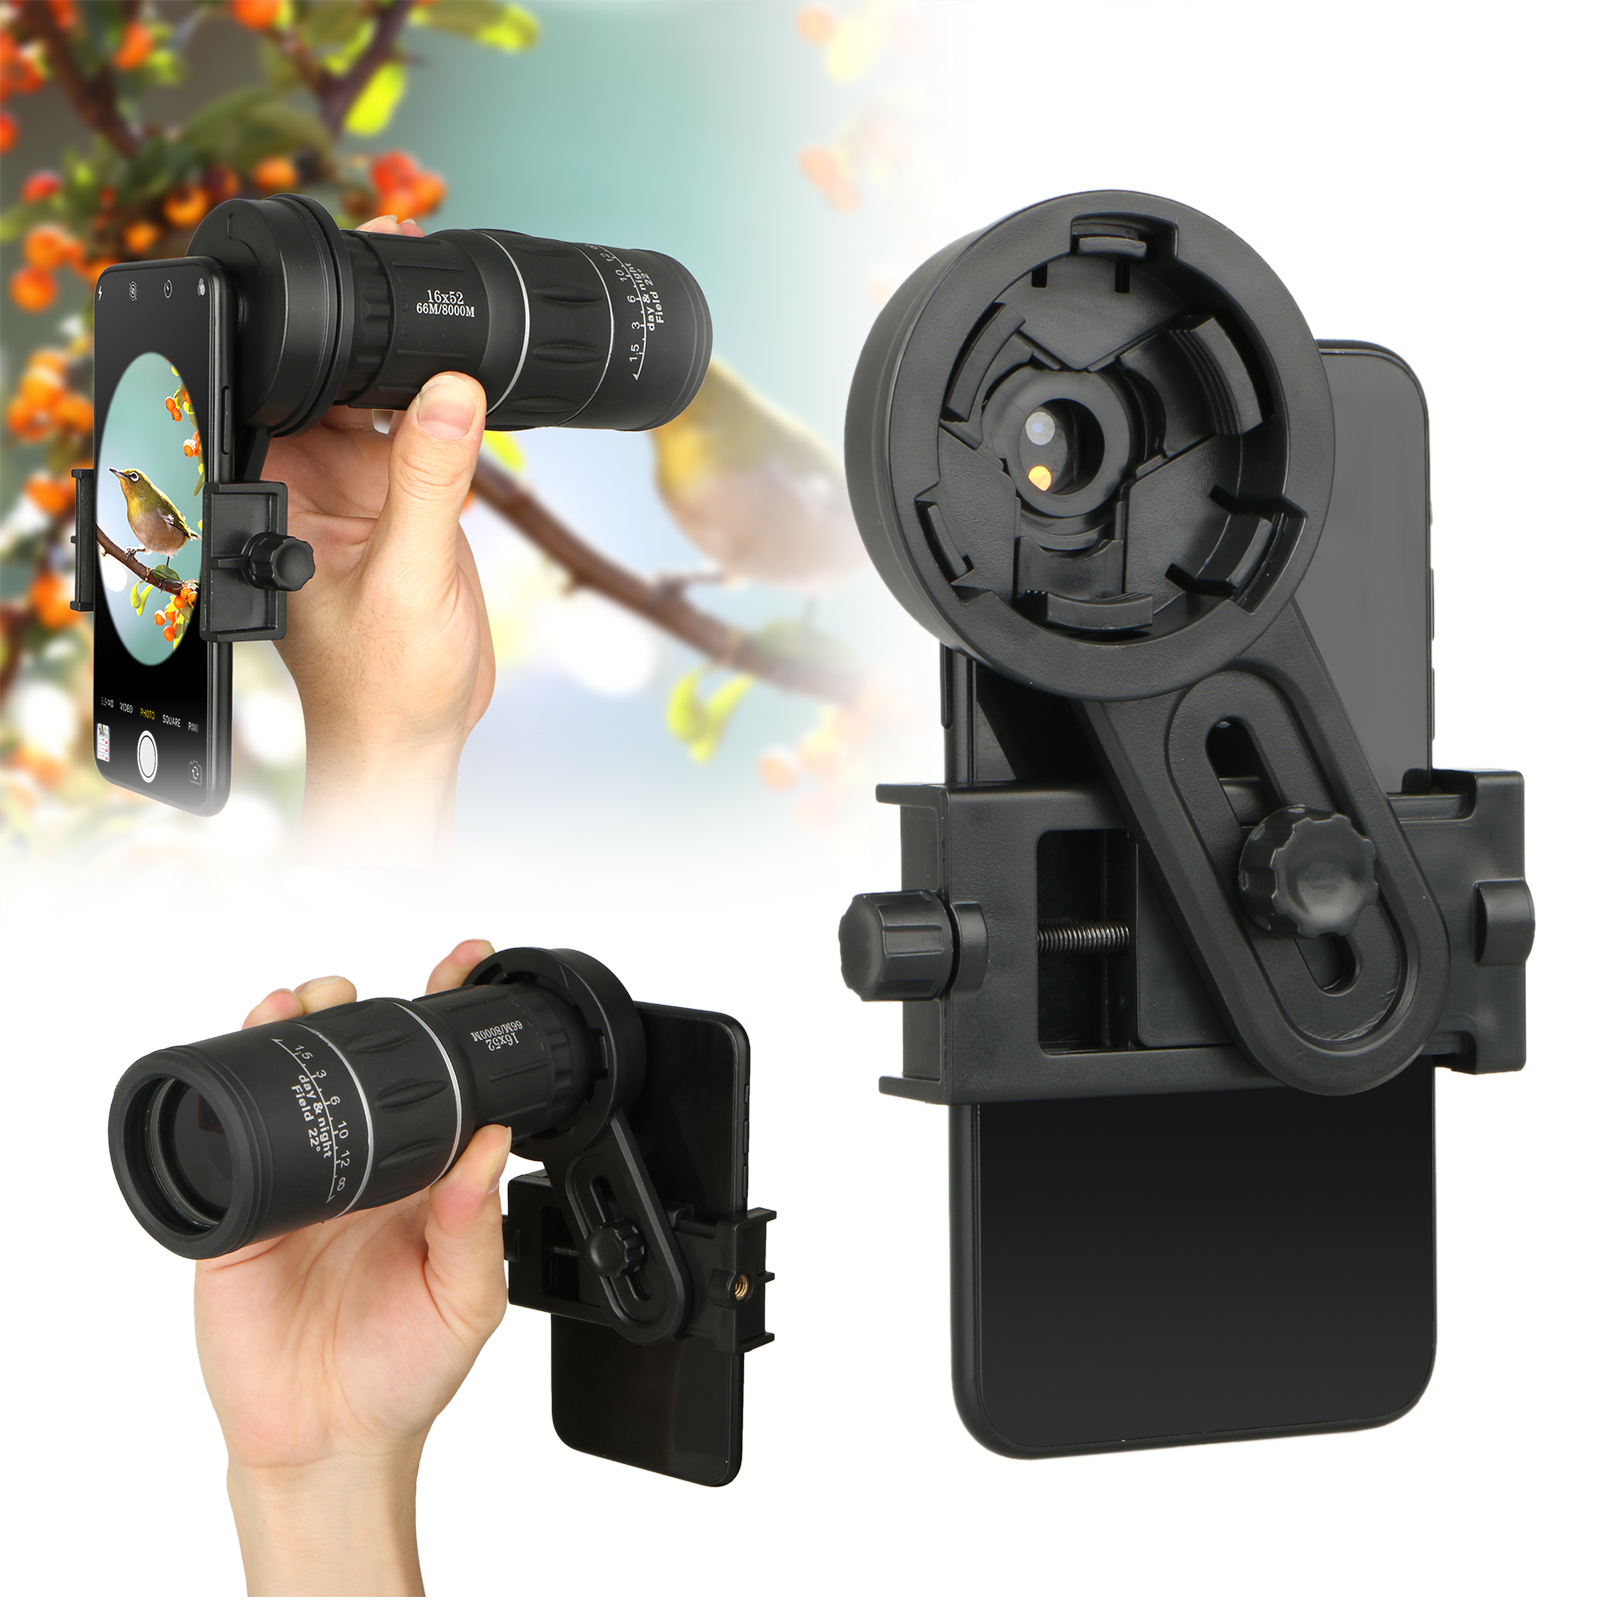 Universal Cell Phone Adapter Mount For Binocular Monocular Spotting Scope Top 